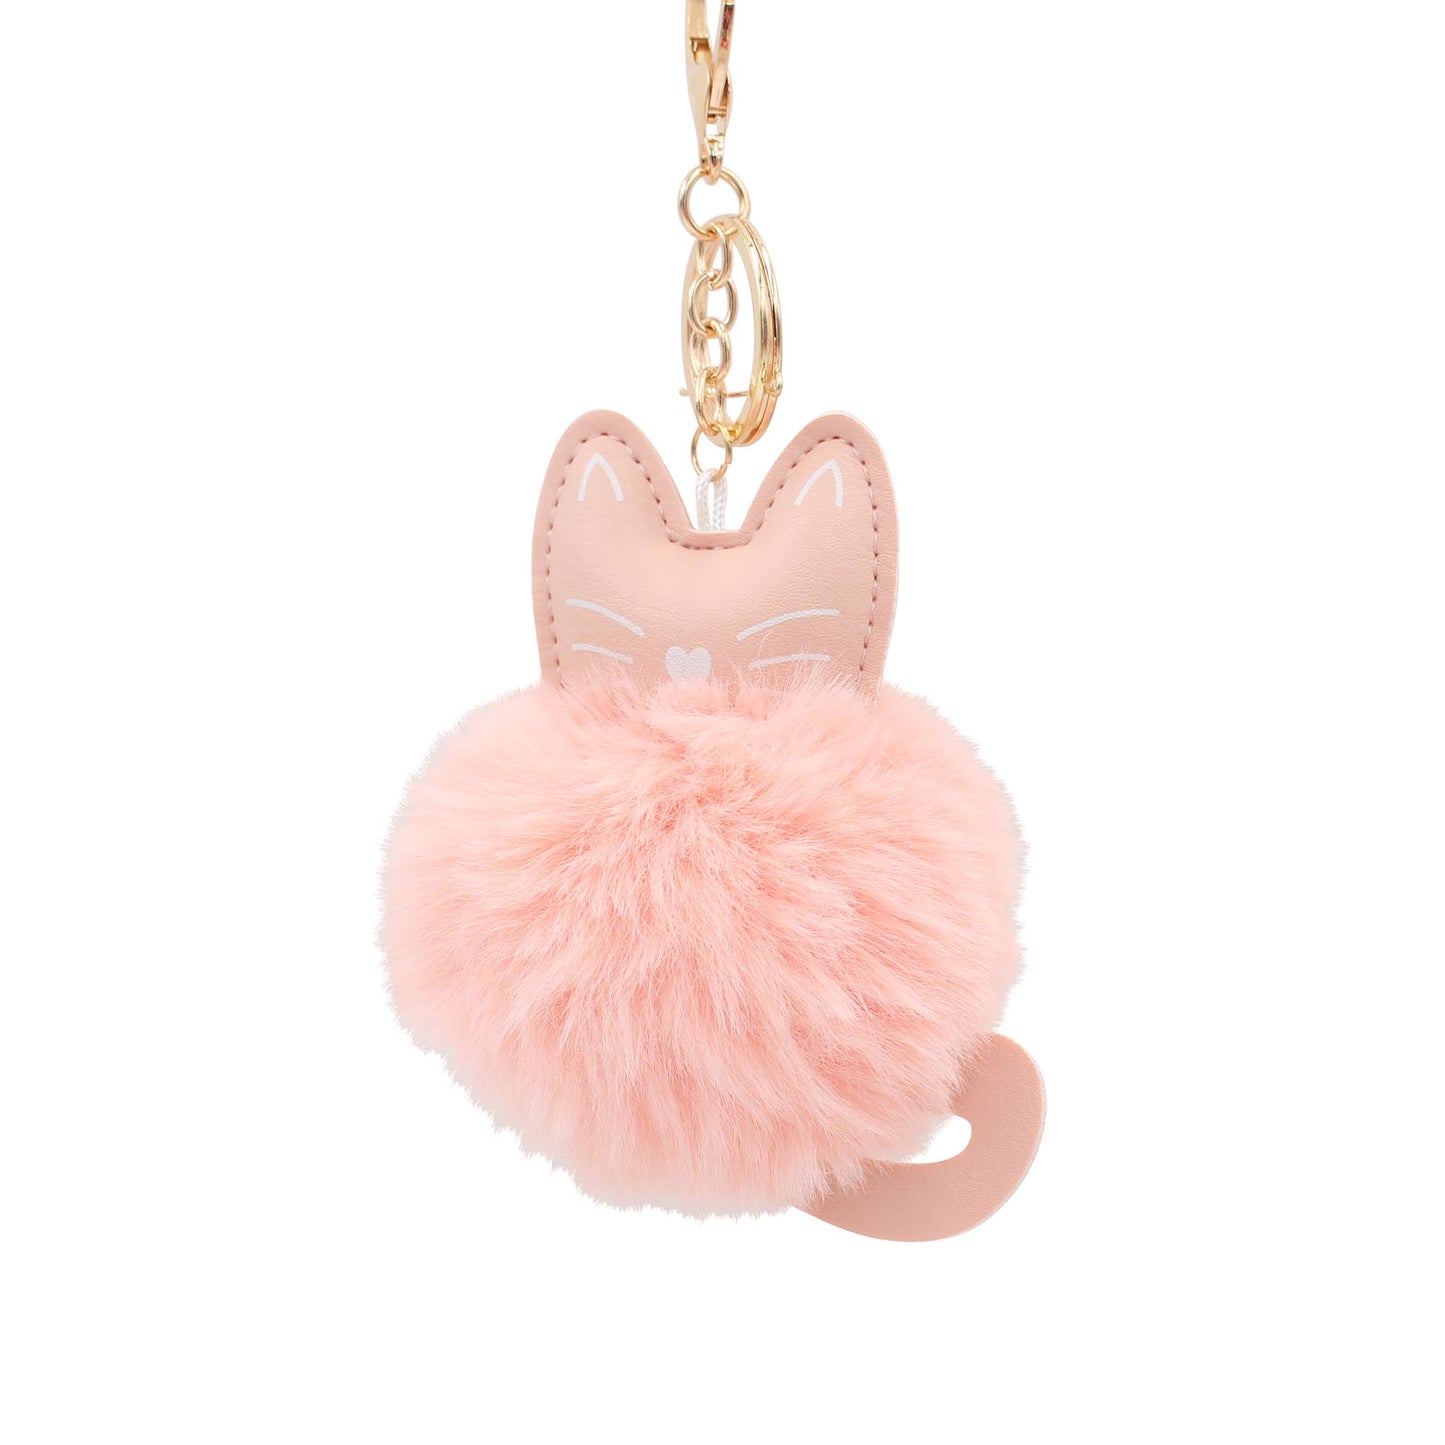 Image of Real Sic Pink Fuzzy Cute Animal Cat - Kitty Pom Pom Charm Key chain